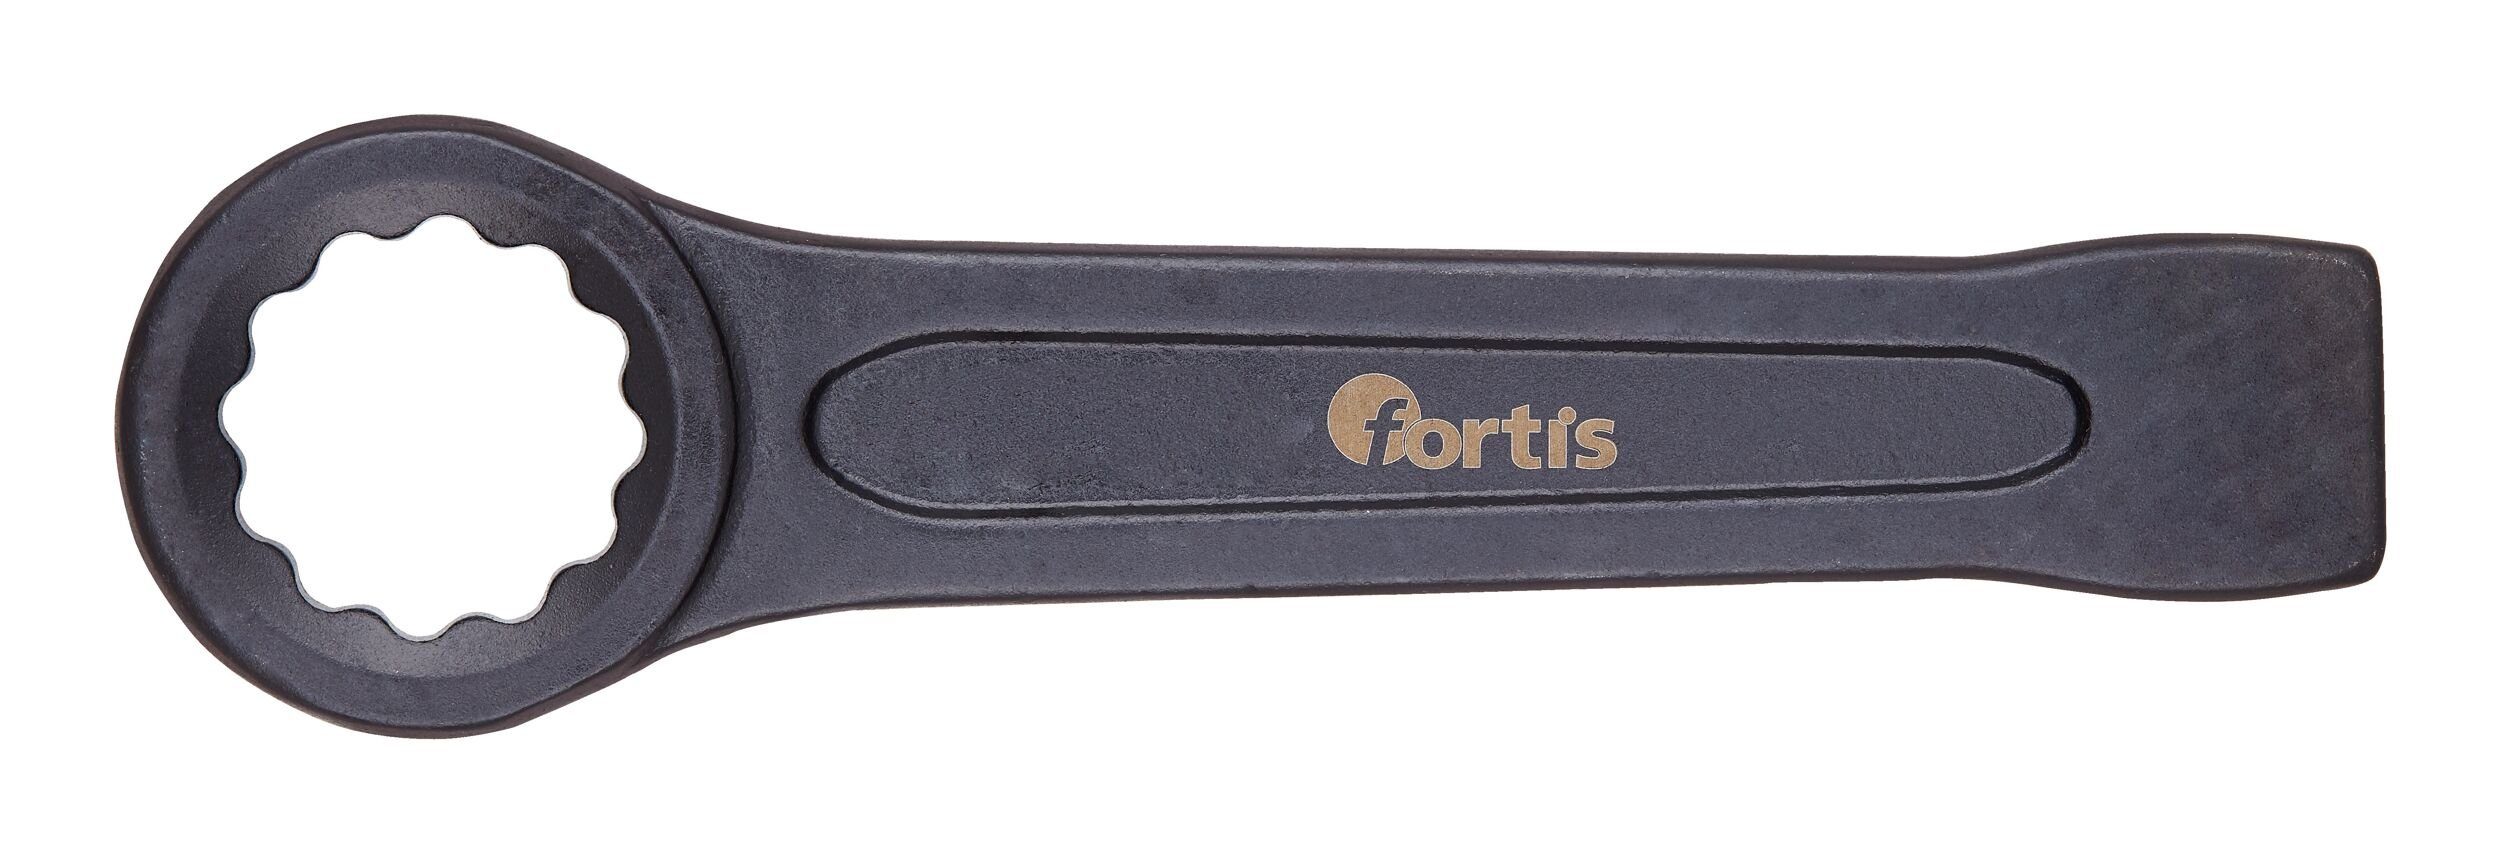 fortis Ringschlüssel, Schlag gerade 46 mm